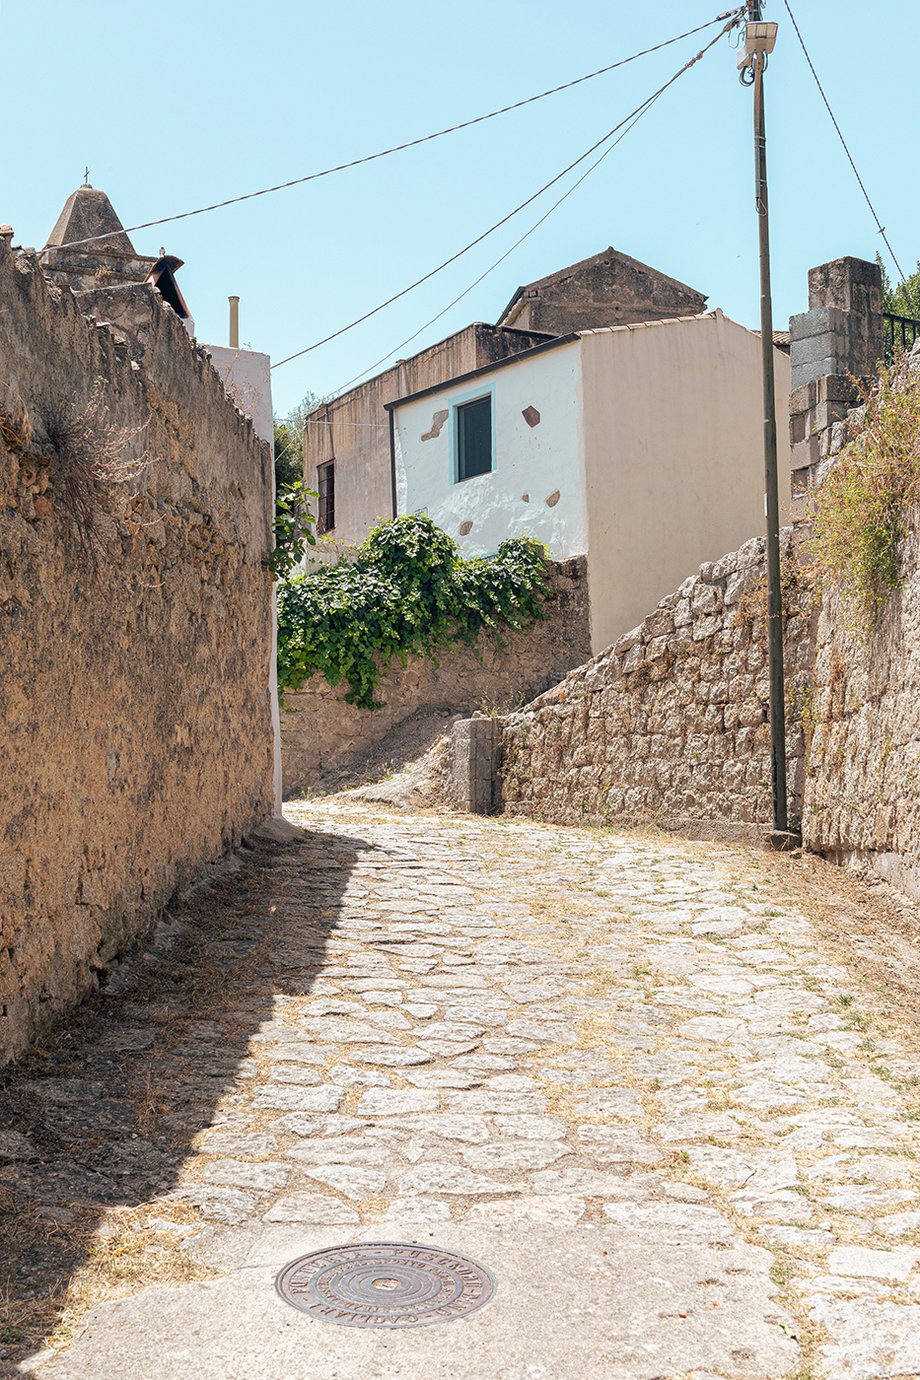 The winding cobblestones streets of Lovelle, Sardinia shot by Alberto Bernasconi for Enjoy magazine